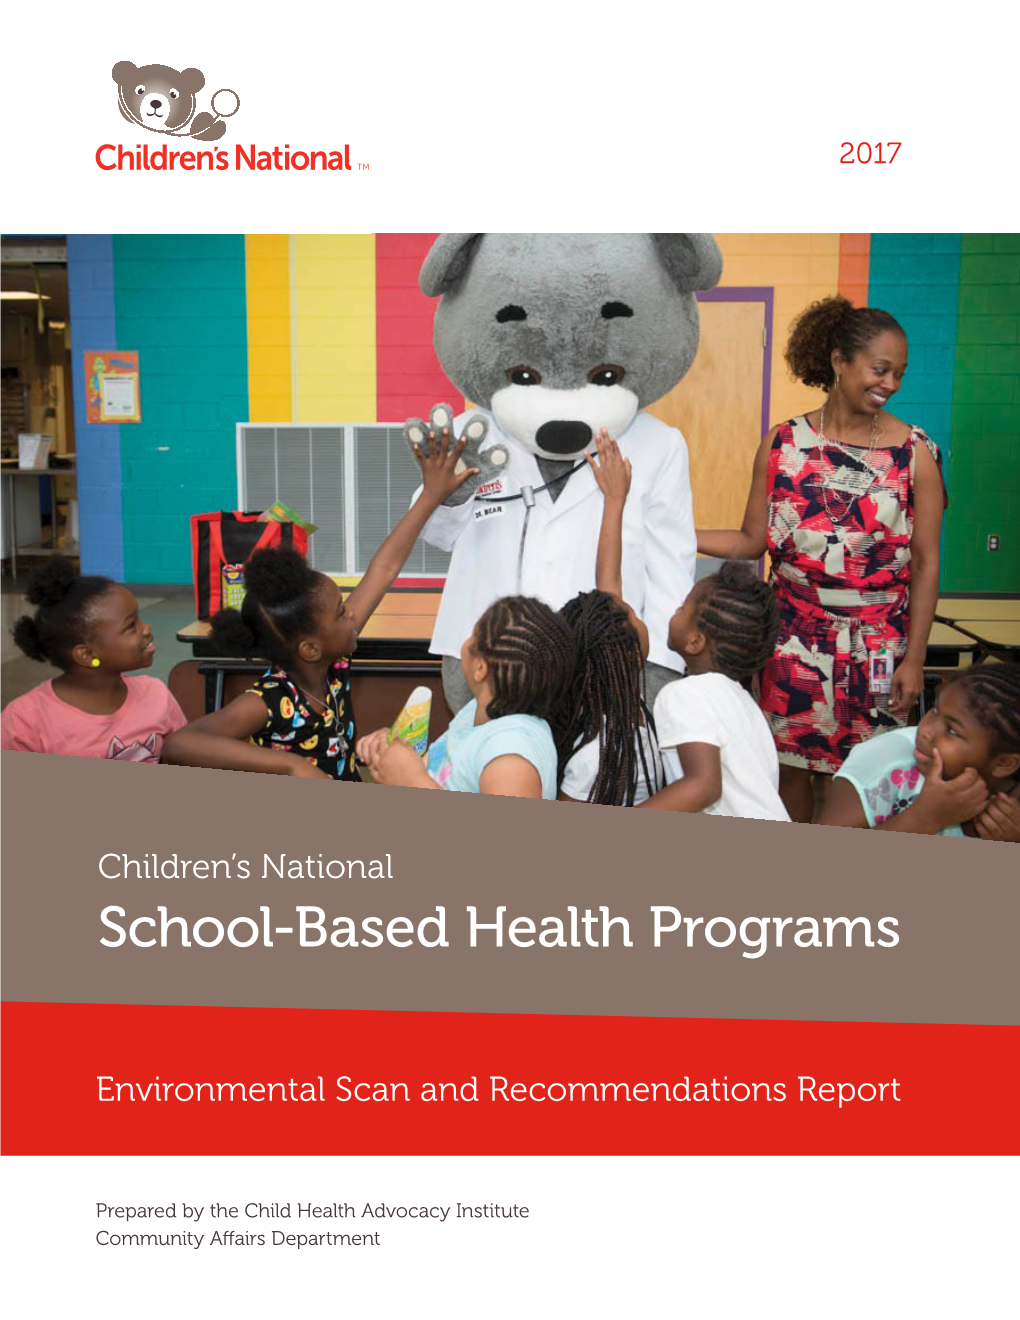 School-Based Health Programs